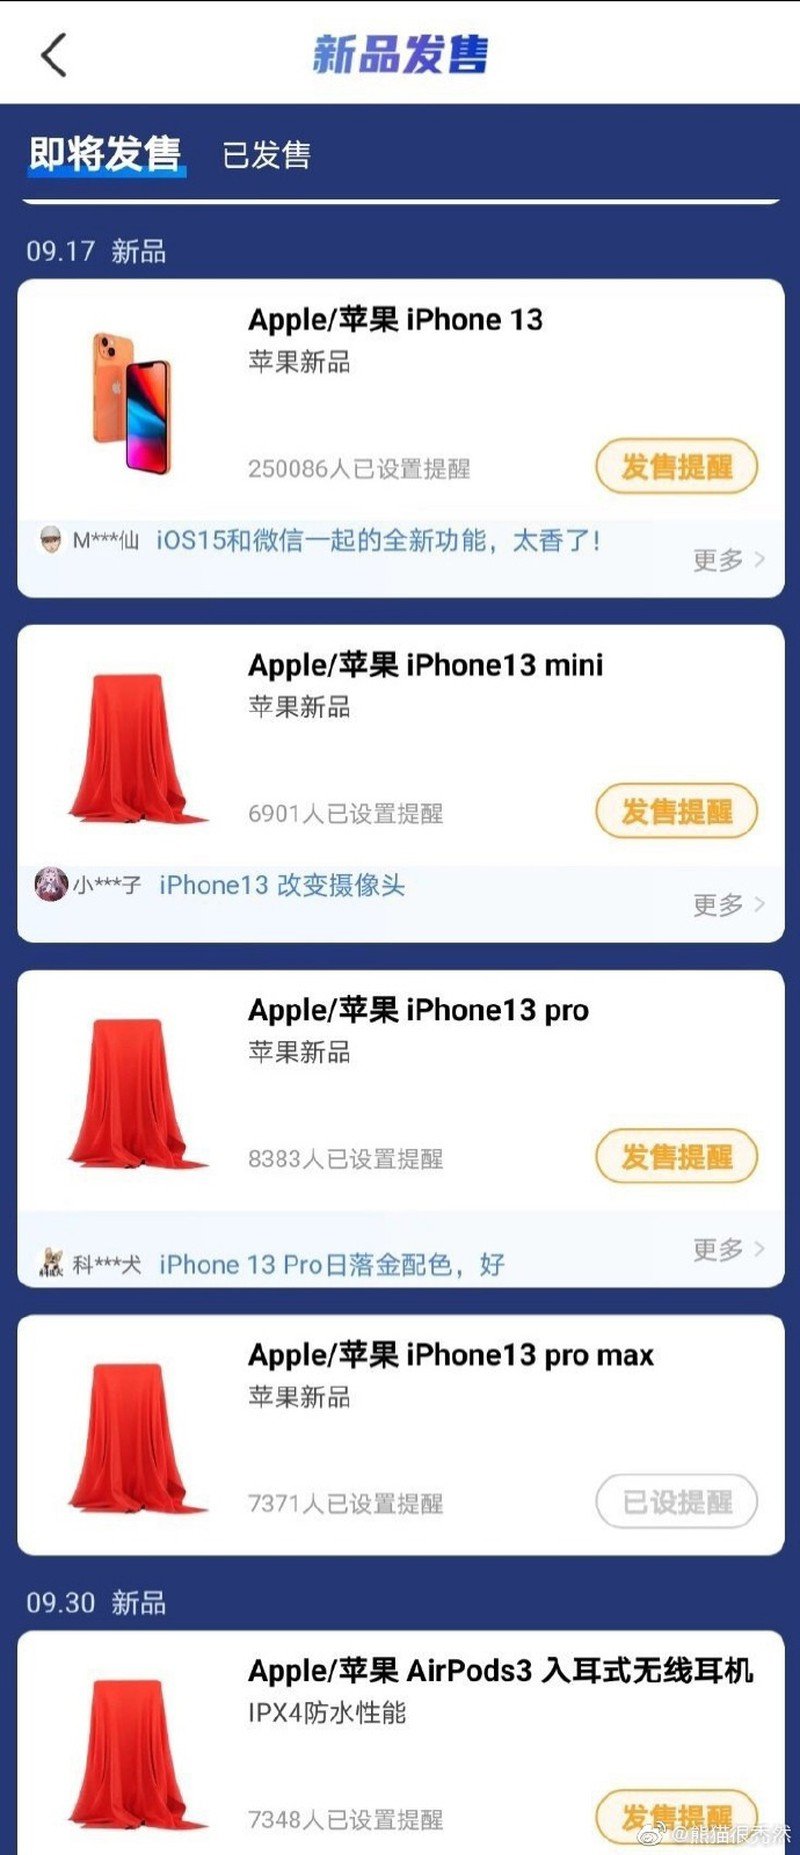 iPhone 13: Ανακοινώνονται 7 Σεπτεμβρίου, κυκλοφορούν στις 17